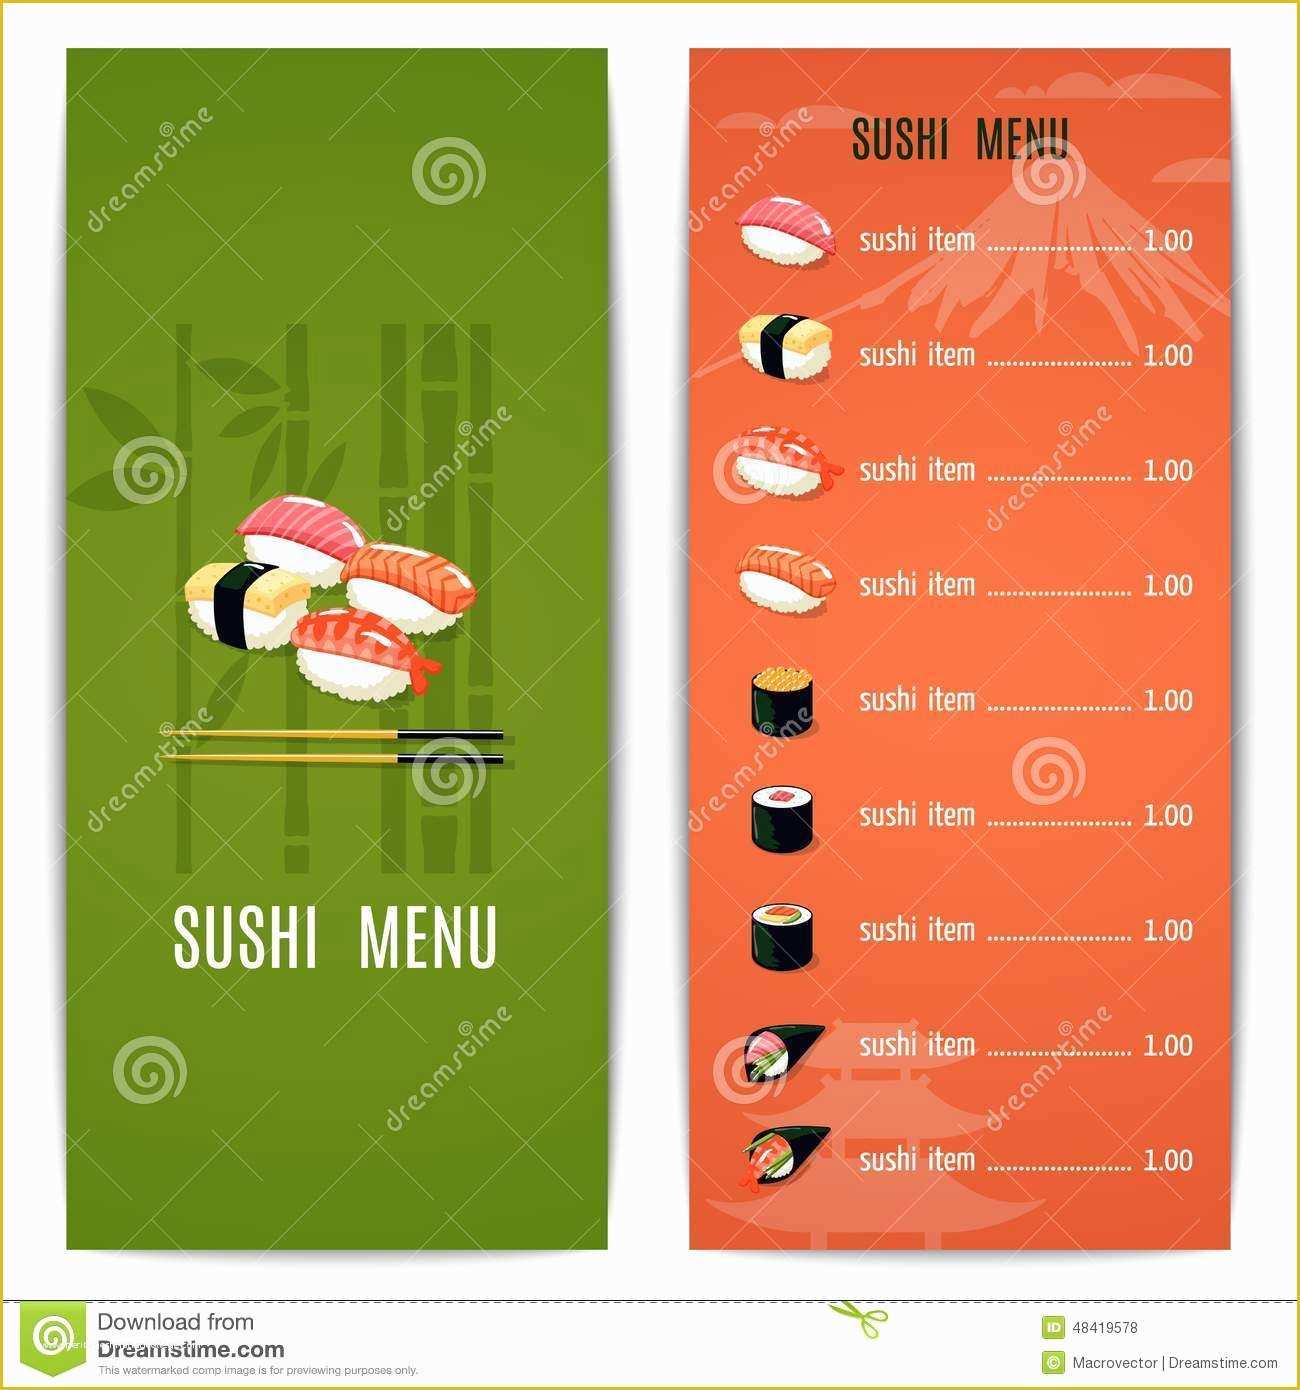 Sushi Menu Template Free Download Of asian Food Menu Stock Vector Illustration Of Cooking